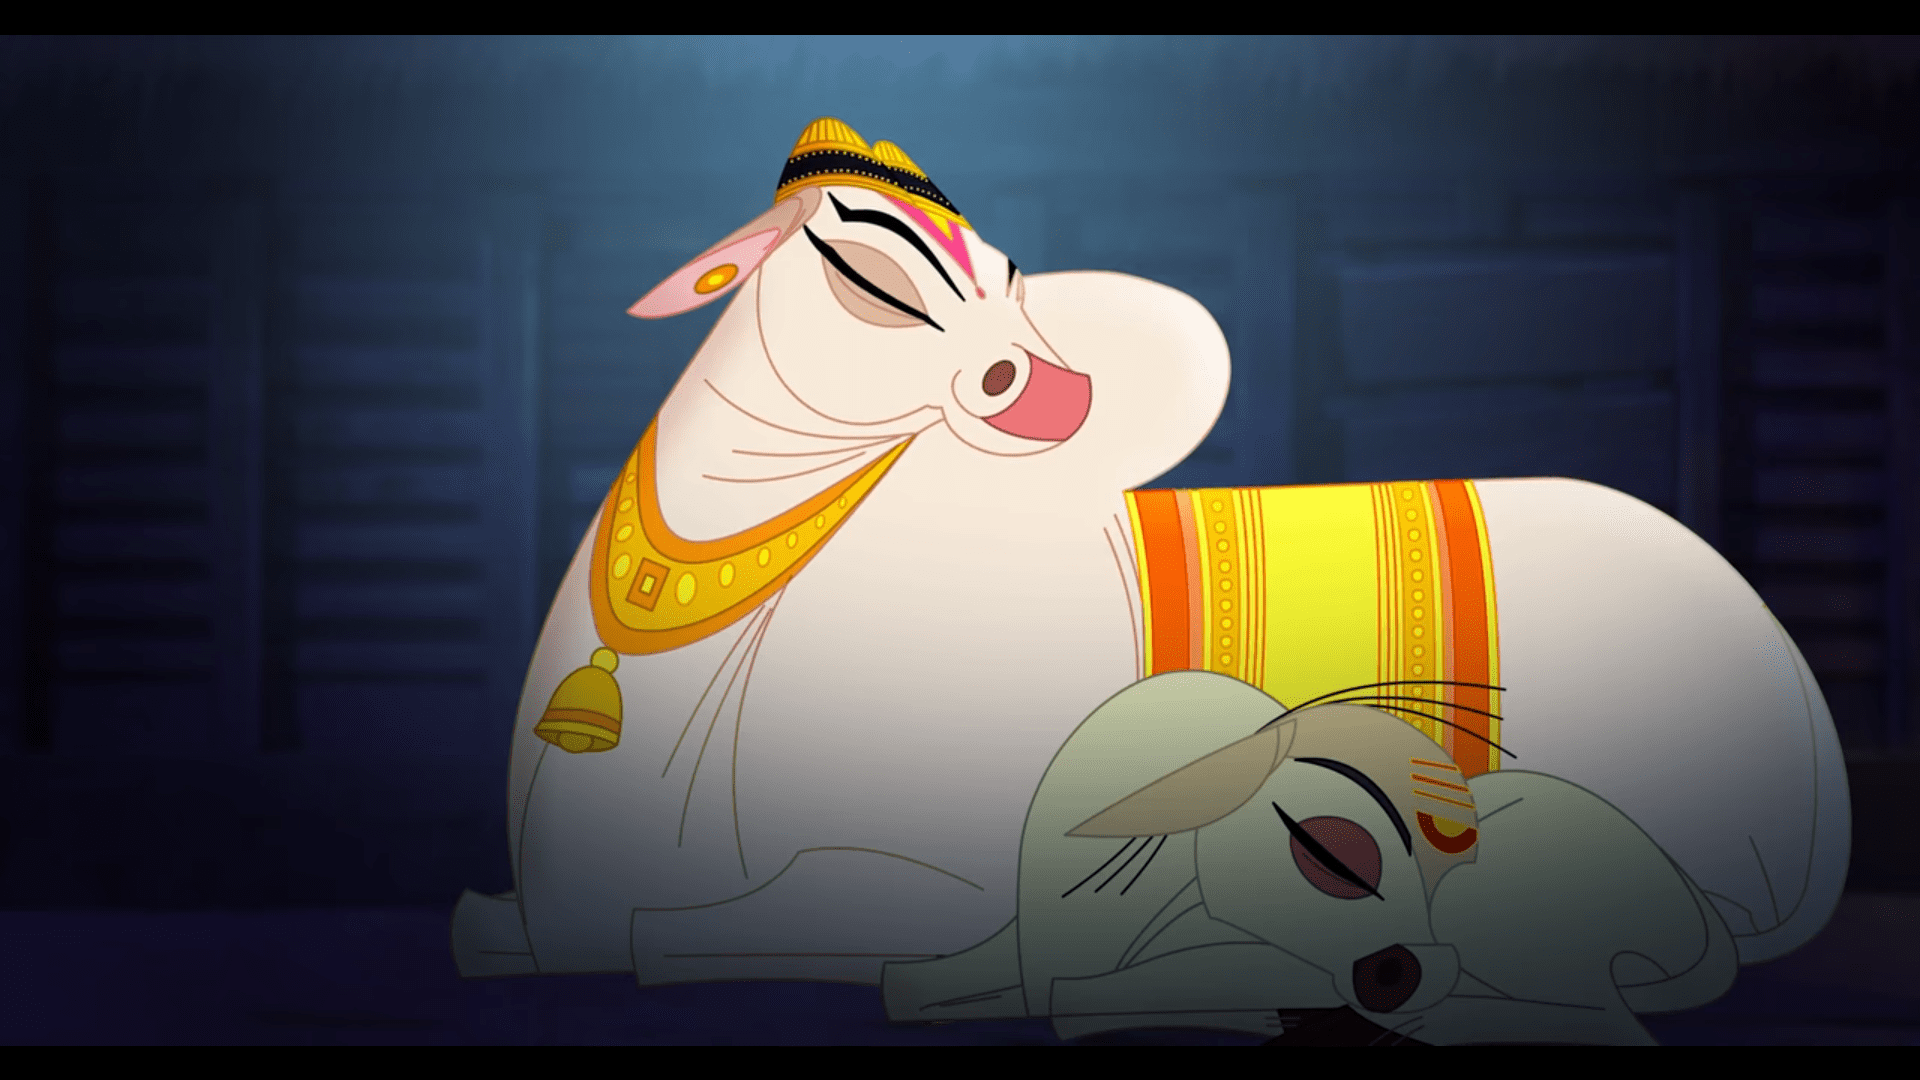 The Journey of World's First Sanskrit Animation Film